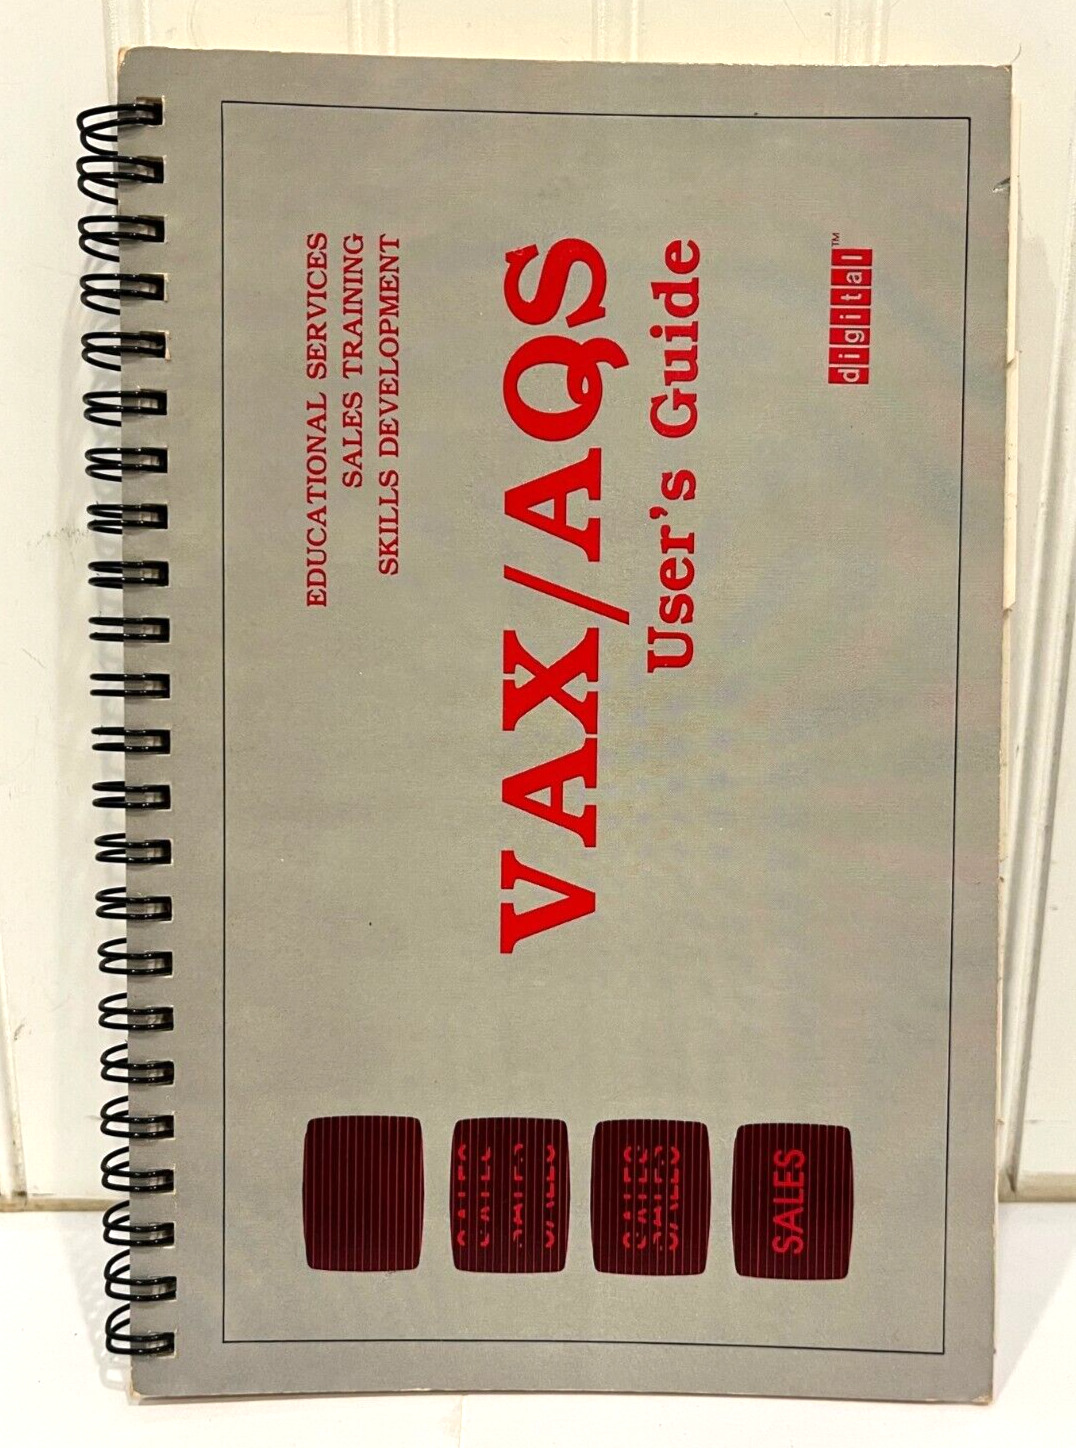 Vintage Digital Equipment Coprporat DEC VAX/AQS User's guide - Sales Training